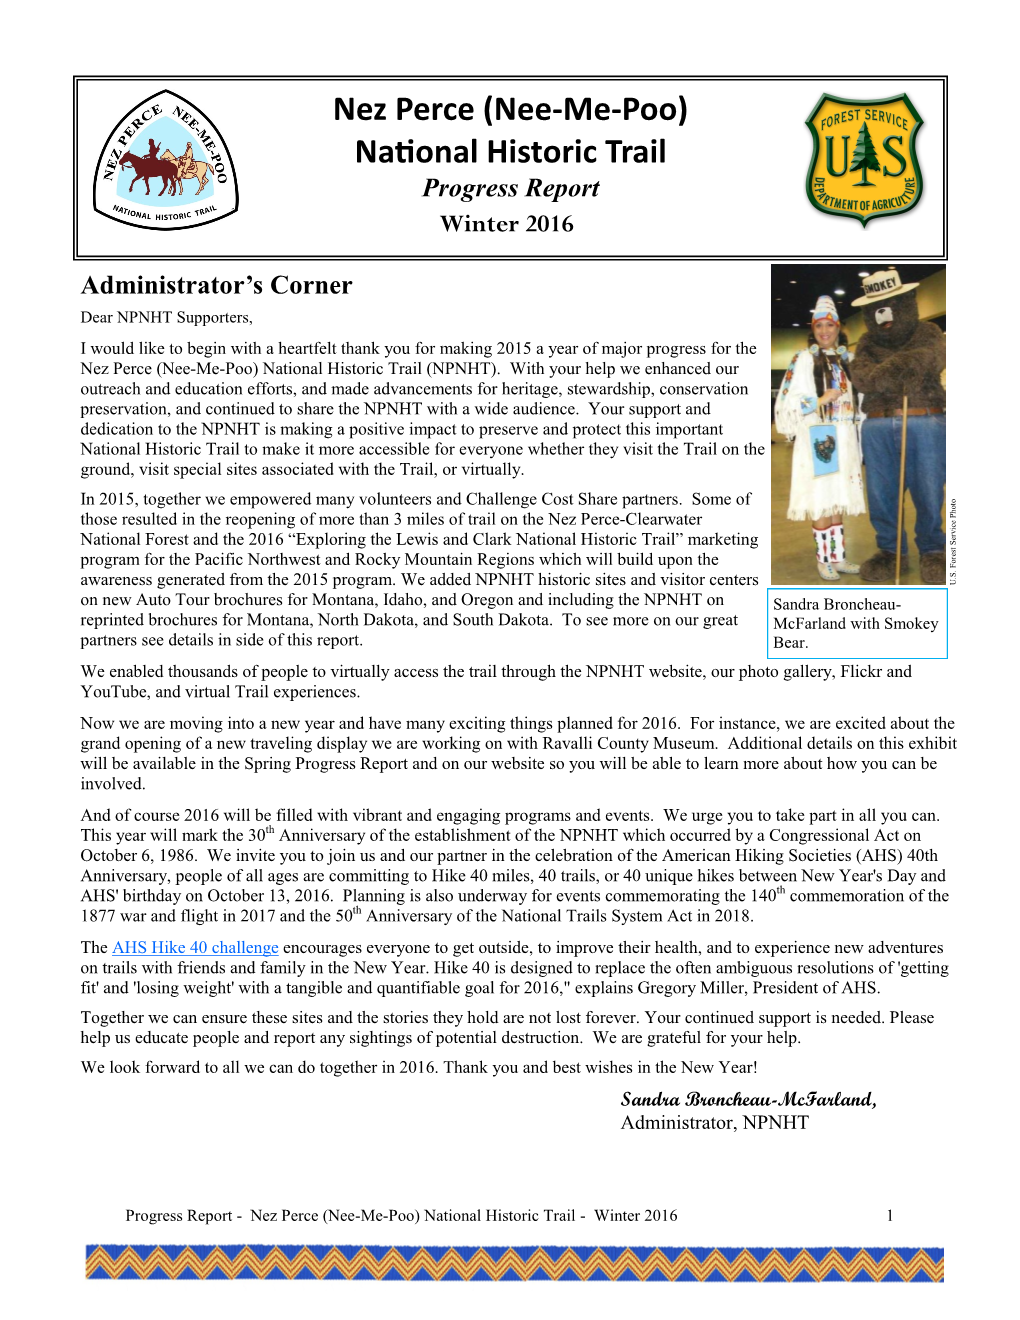 National Historic Trail Progress Report Winter 2016